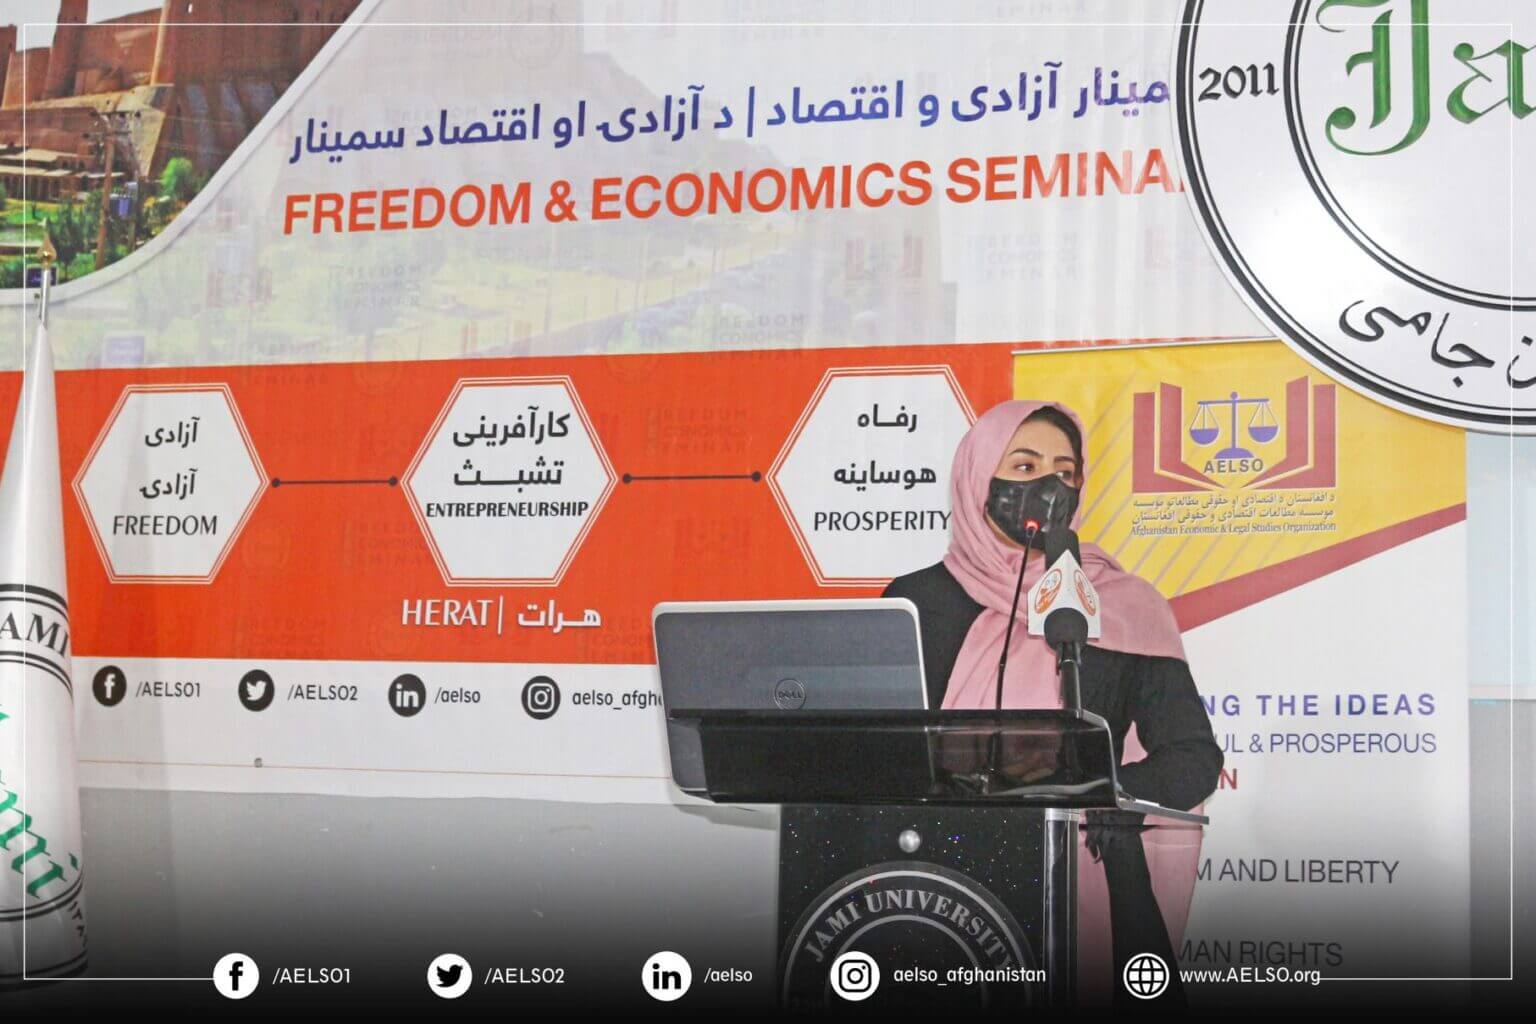 Shakiba Sediqi, a participant of “Freedom & Economics Seminar” in Herat province